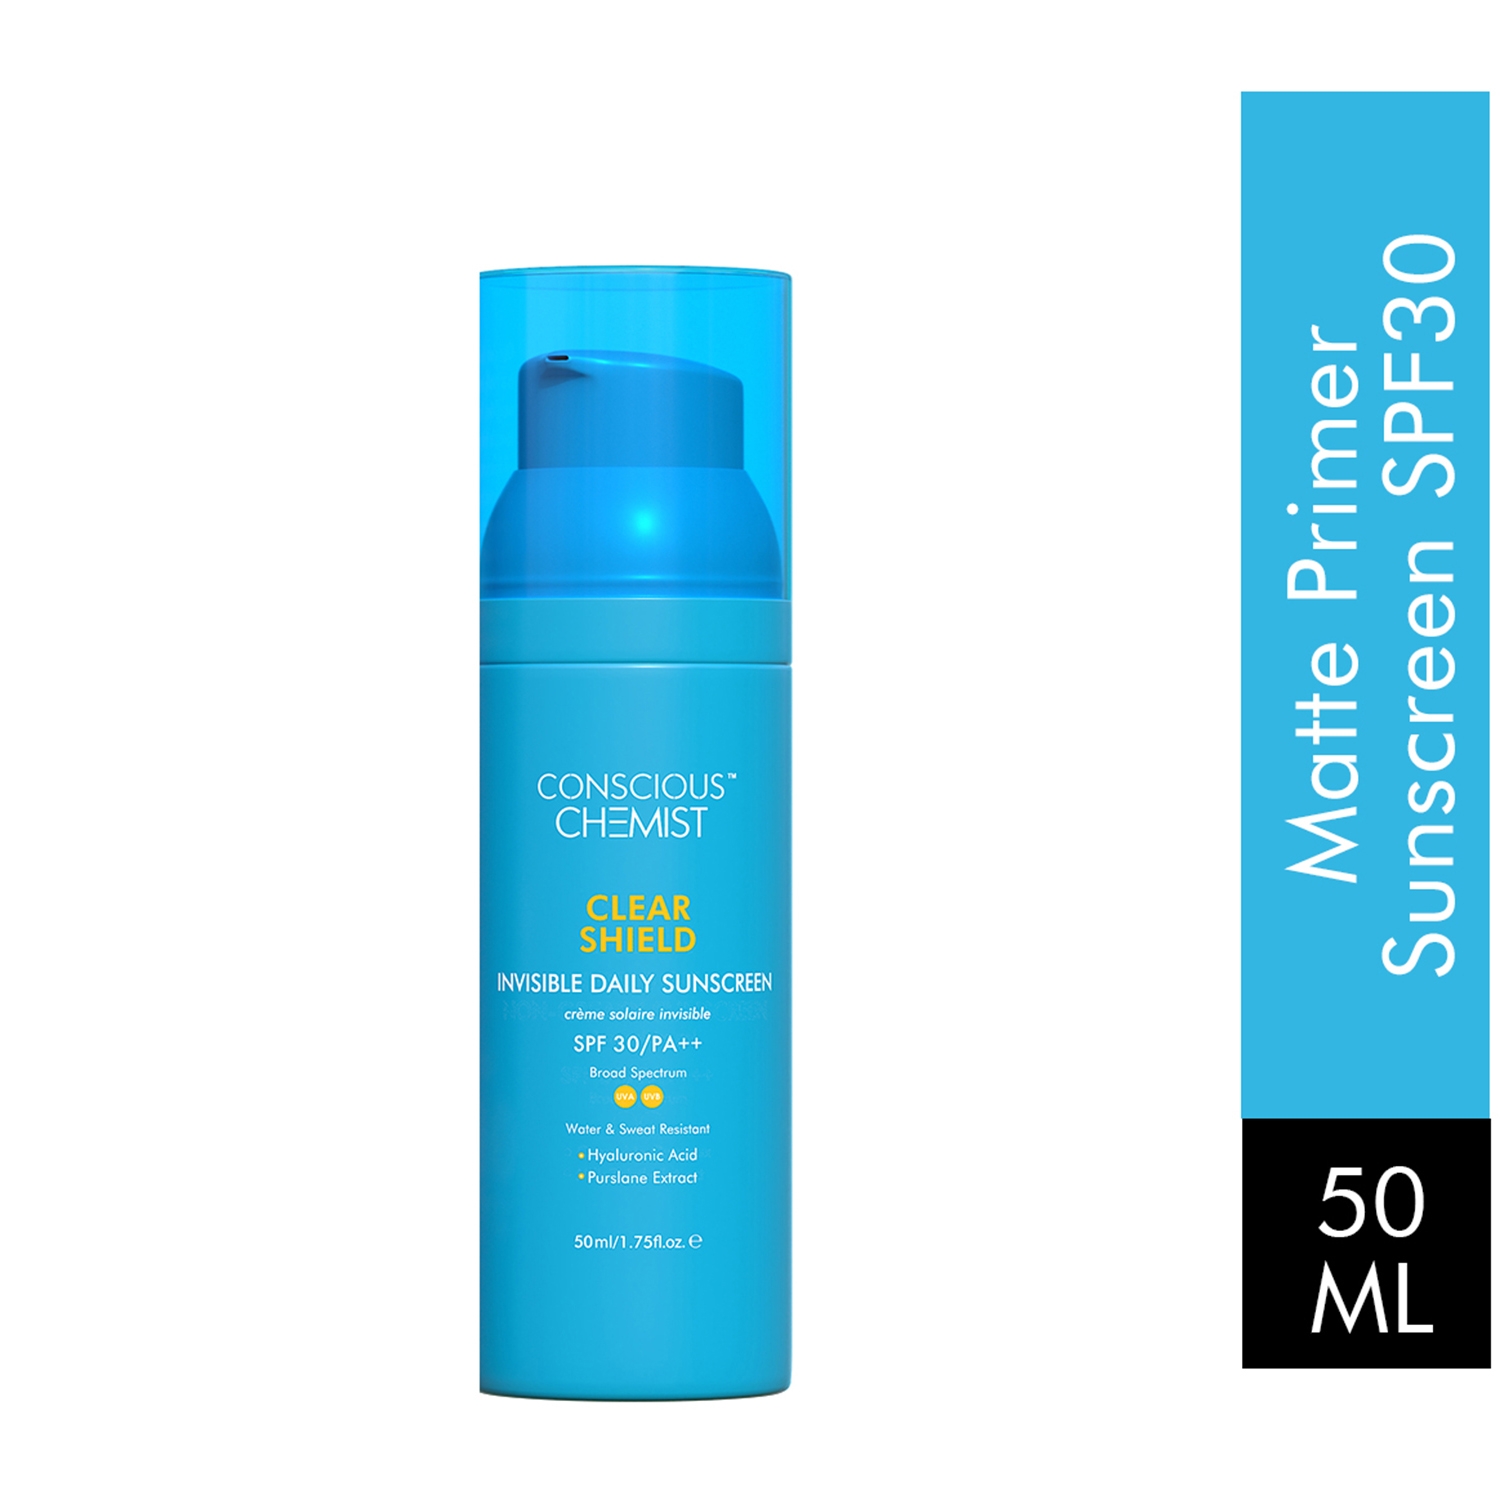 Conscious Chemist | Conscious Chemist Transparent Mattifying Sunscreen SPF30 PA++ UVA/UVB Protection- (50ml)